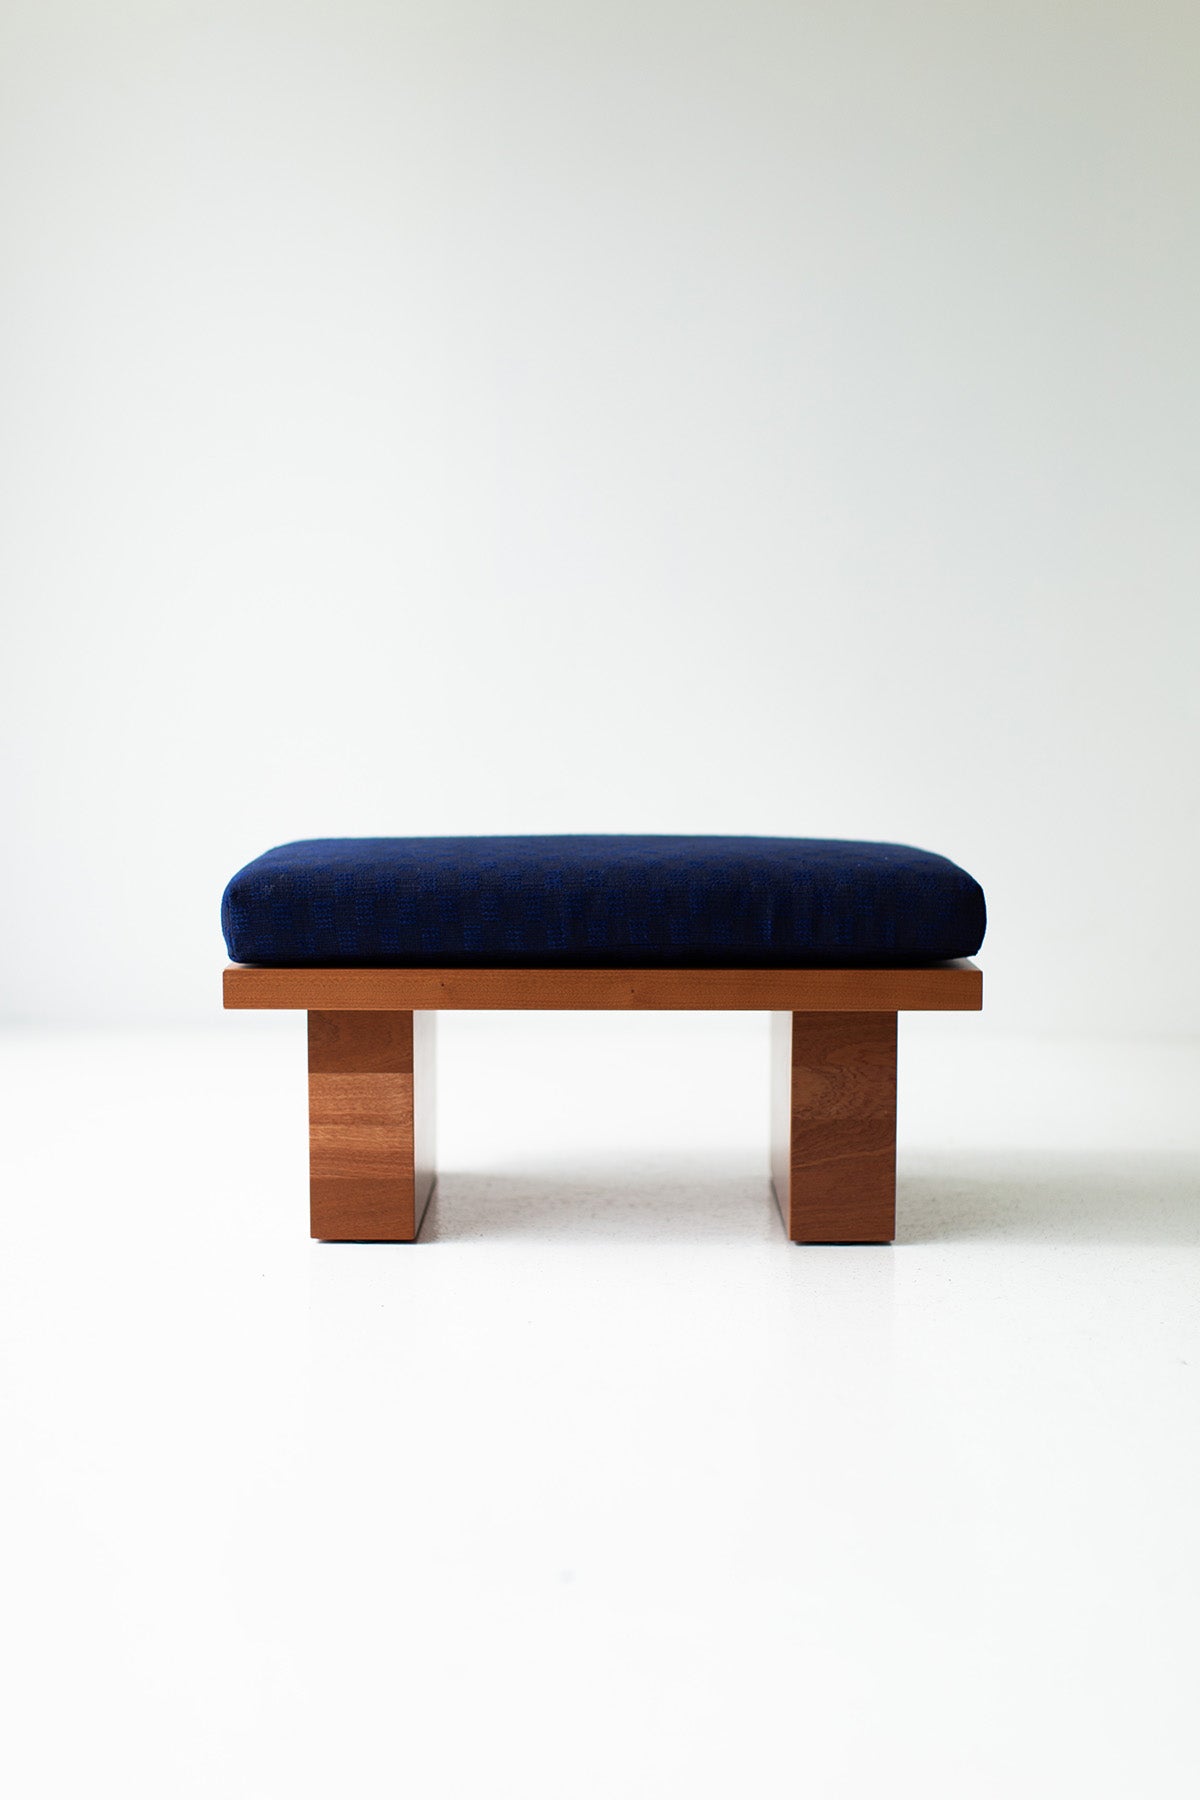 Modern-Patio-Furniture-Suelo-Chair-Ottoman-09